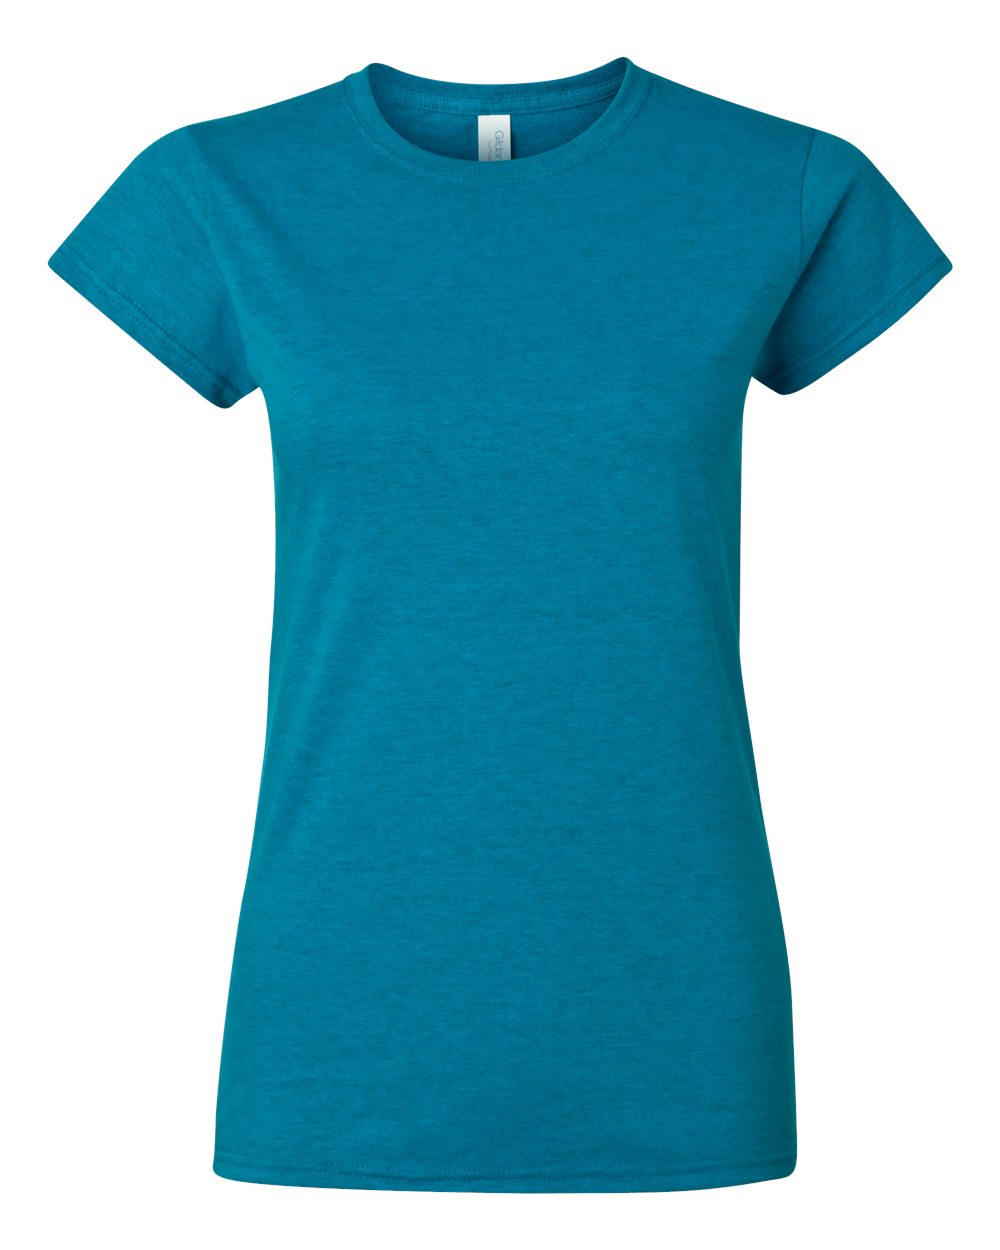 Gildan 64000L Ladies' SoftStyle T-Shirt $3.56 - T-Shirts